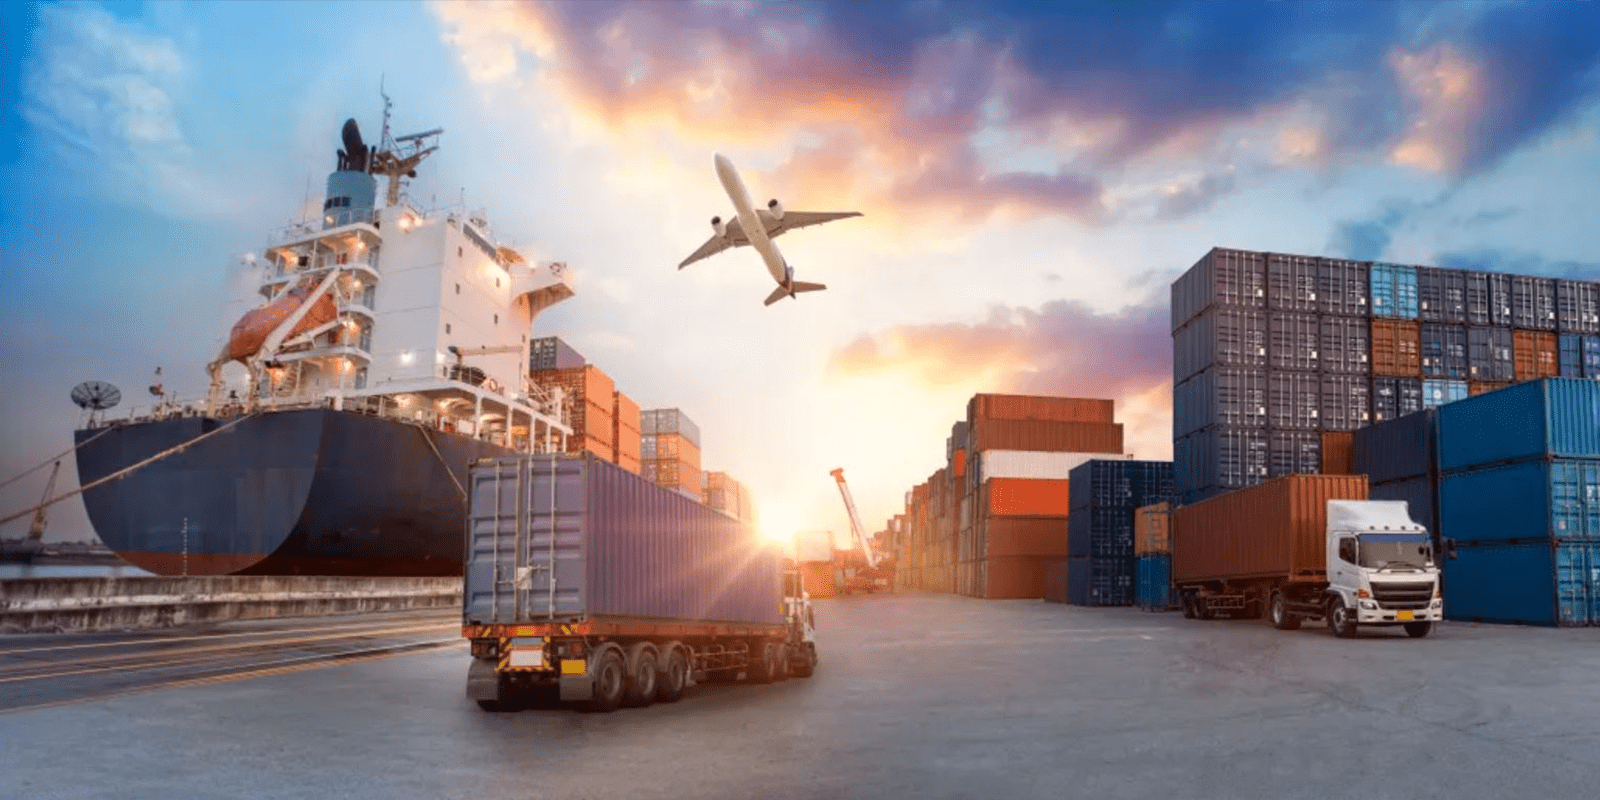 logistics transportation